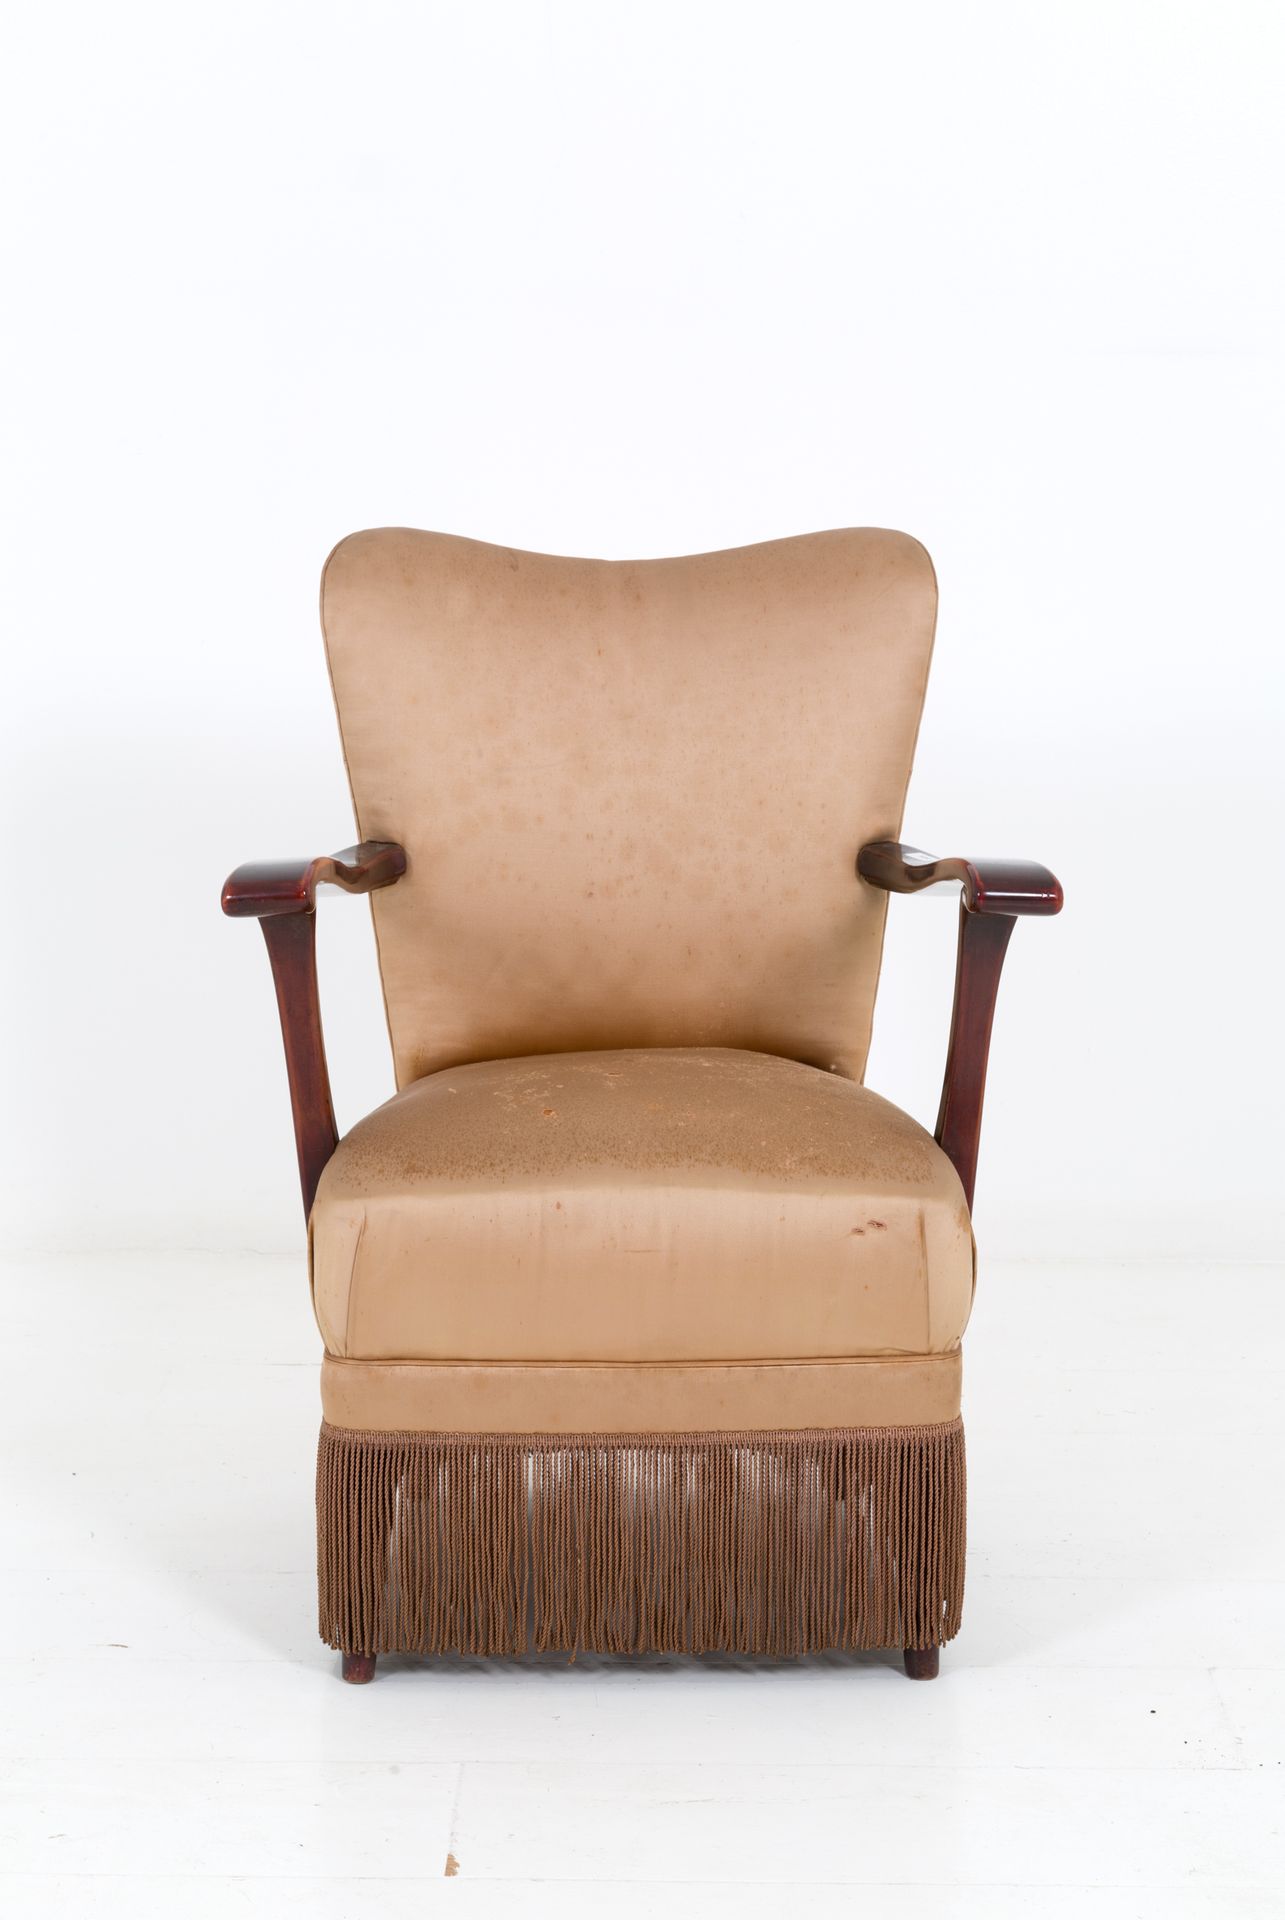 OSVALDO BORSANI for ABV. Armchair with wooden armrests OSVALDO BORSANI (Varedo, &hellip;